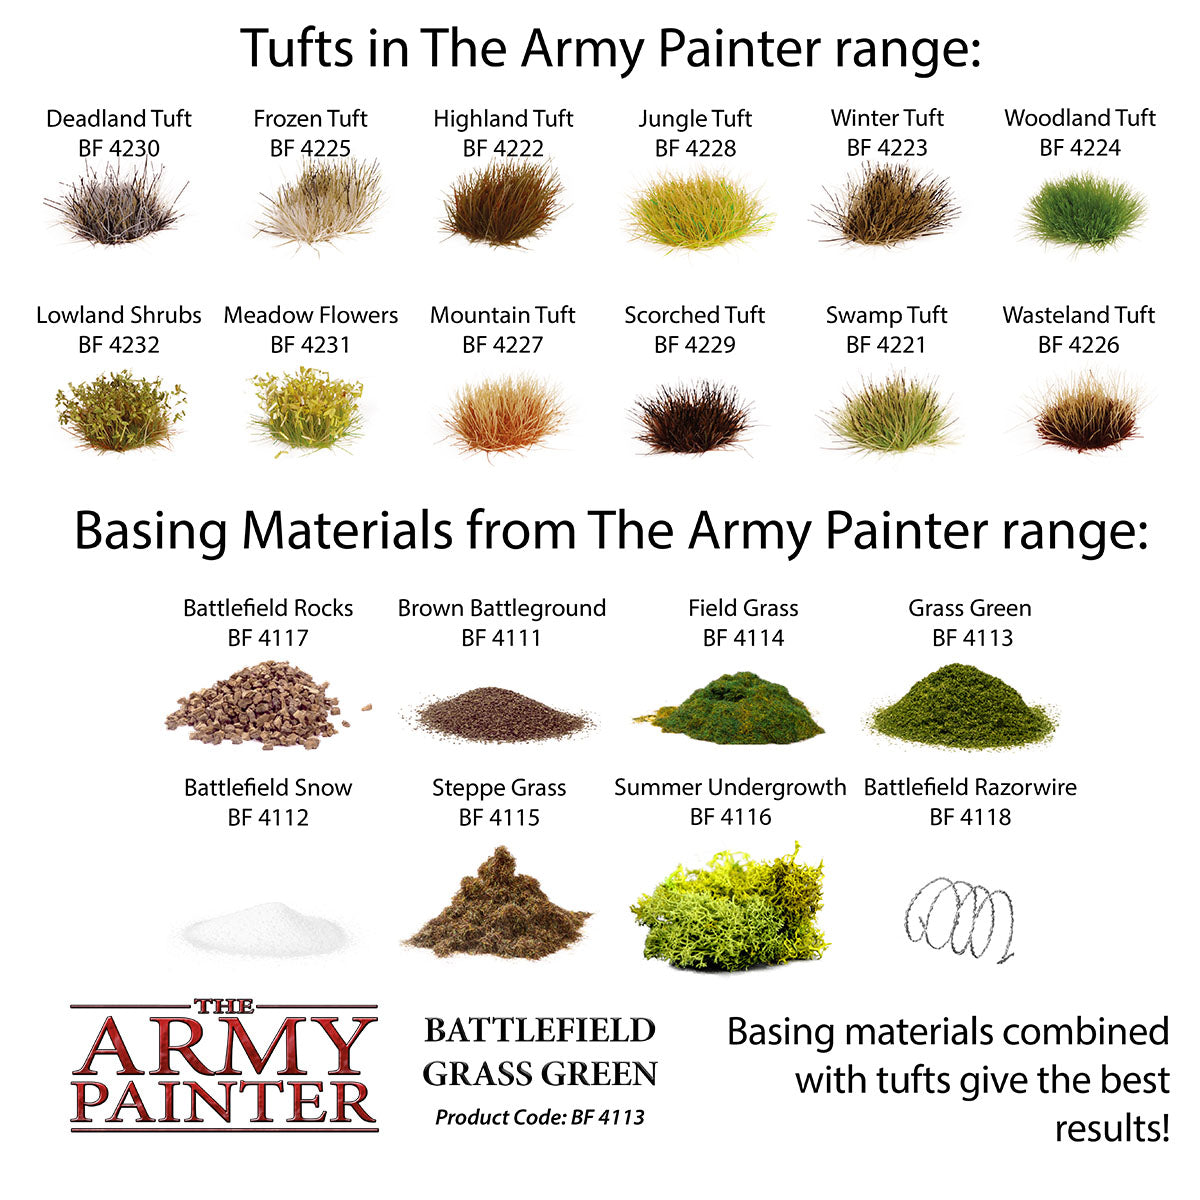 The Army Painter: Battlefield - Grass Green (BF4113) • empiregames